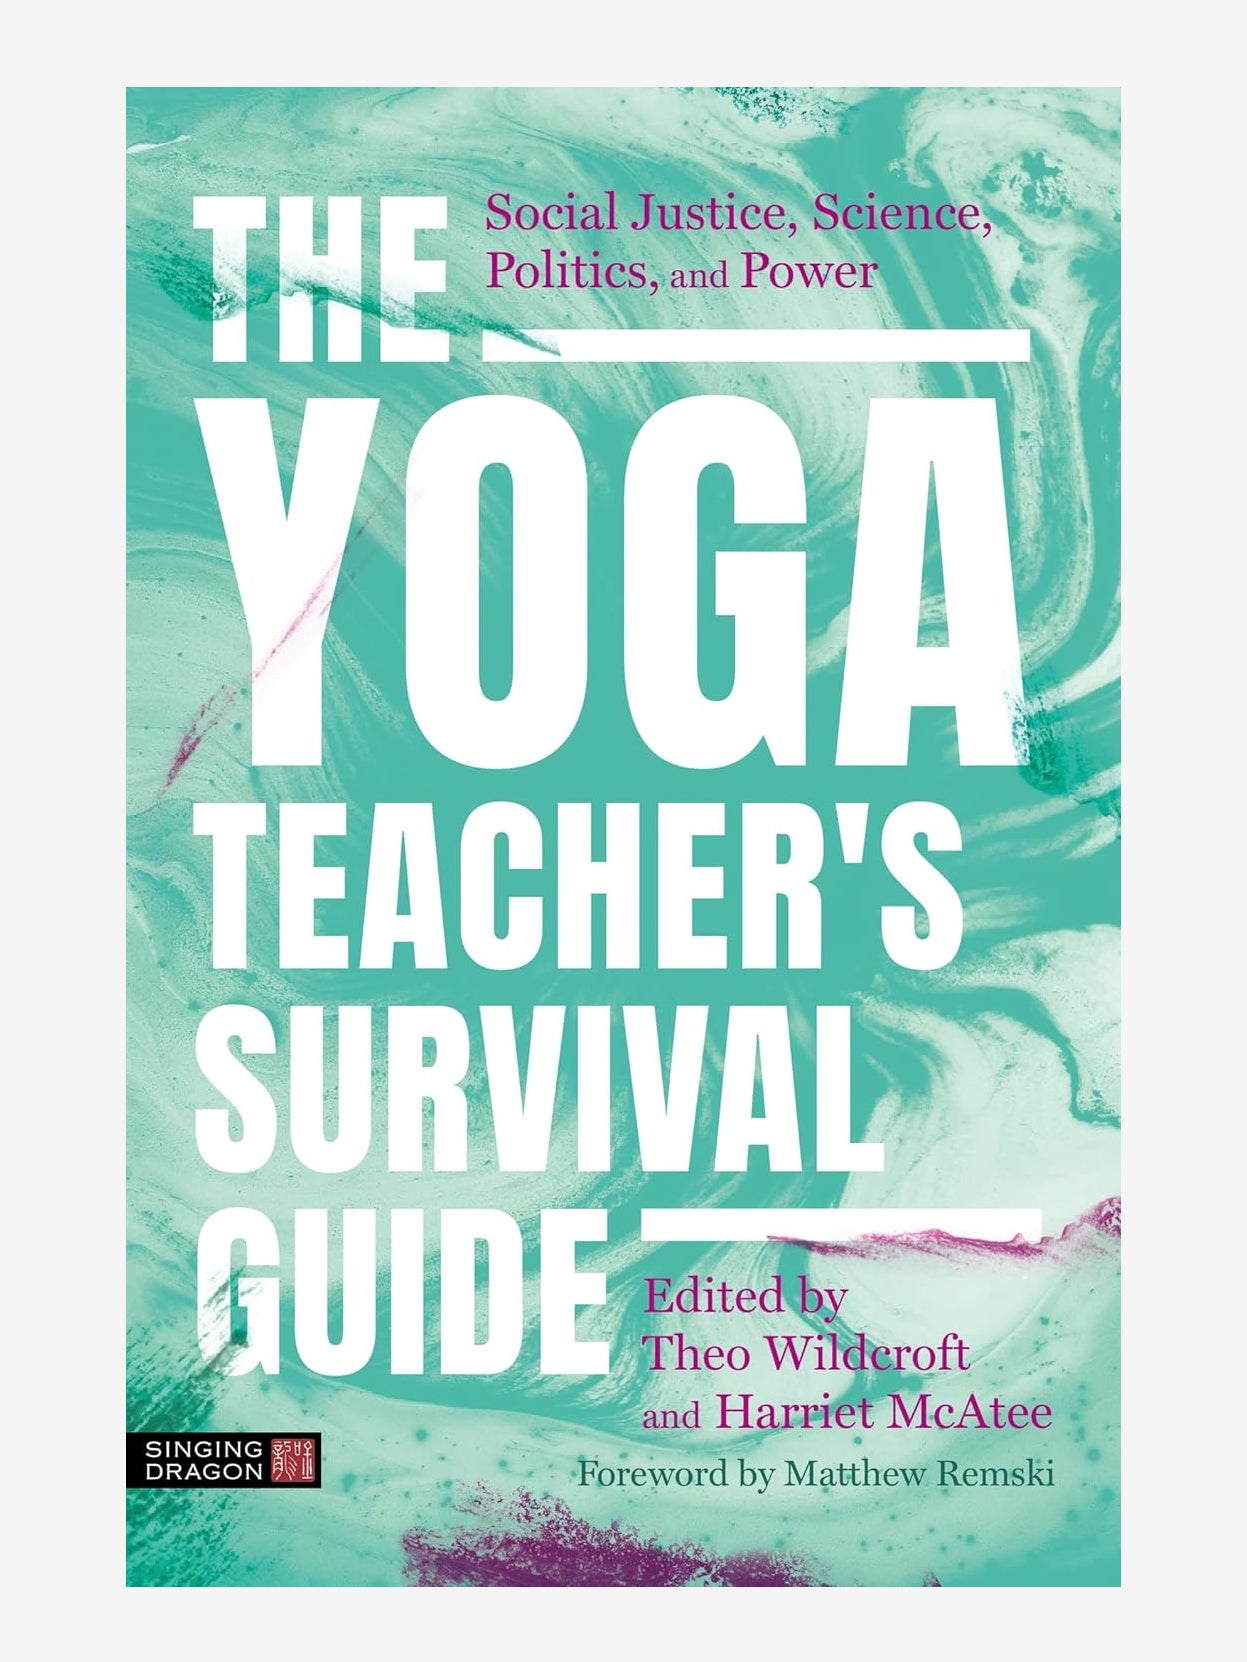 The Yoga Teacher's Survival Guide